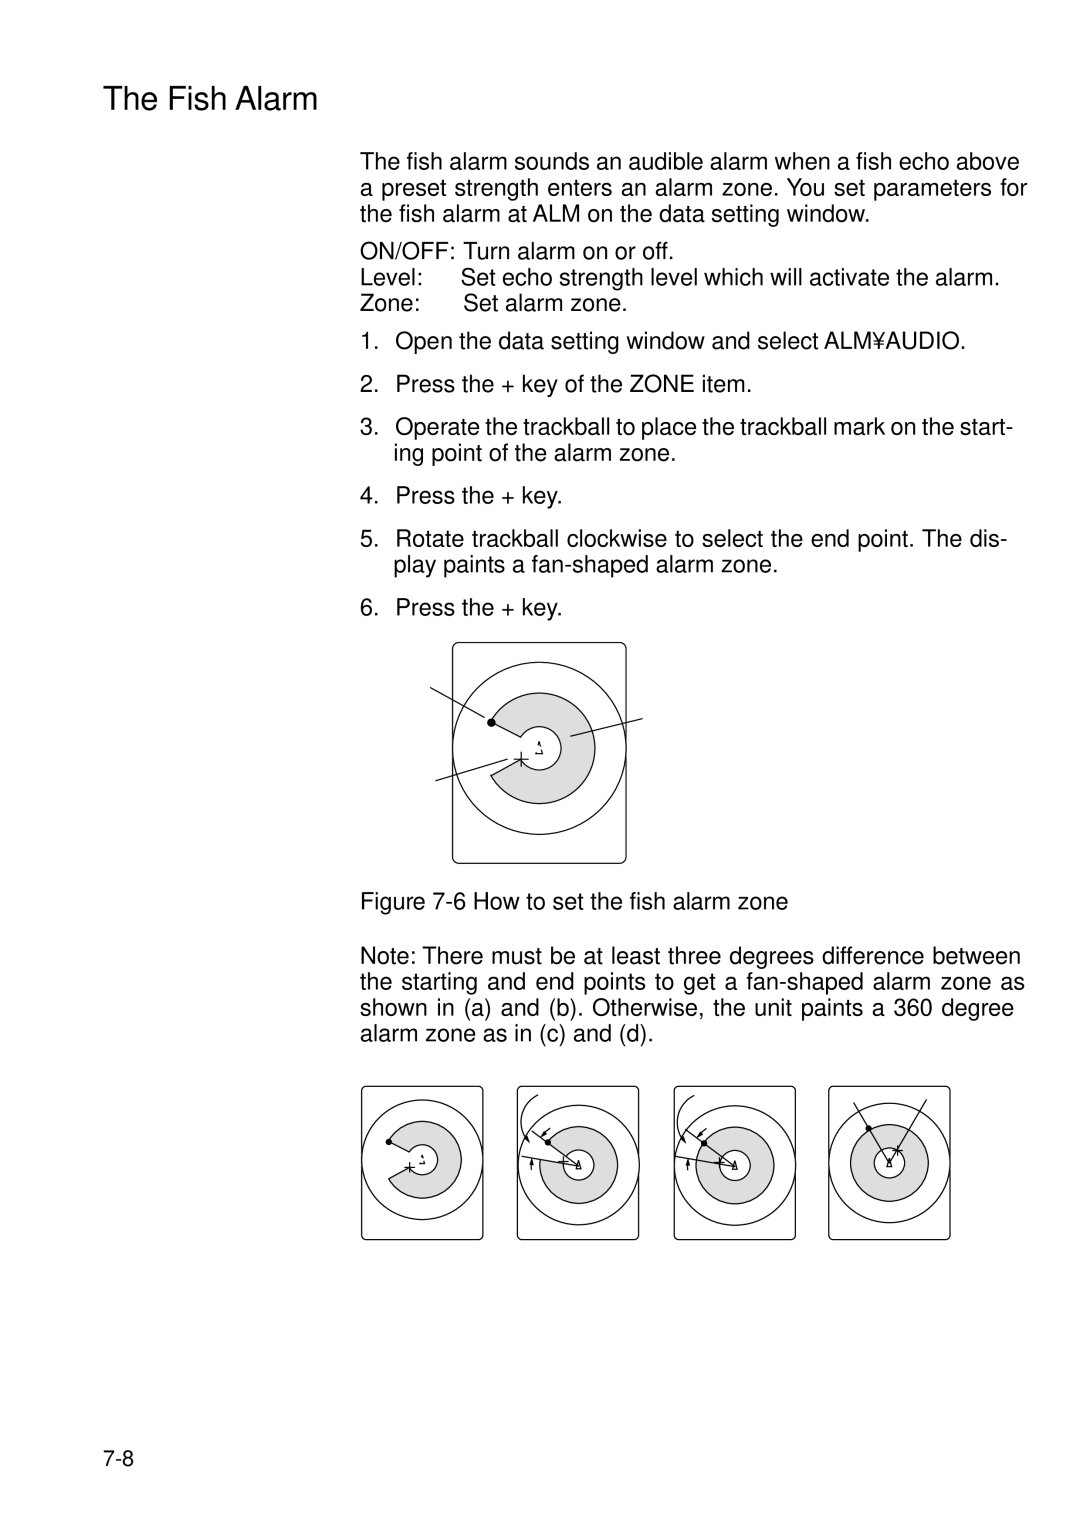 Furuno MODEL CSH-73 manual Fish Alarm, How to set the fish alarm zone 